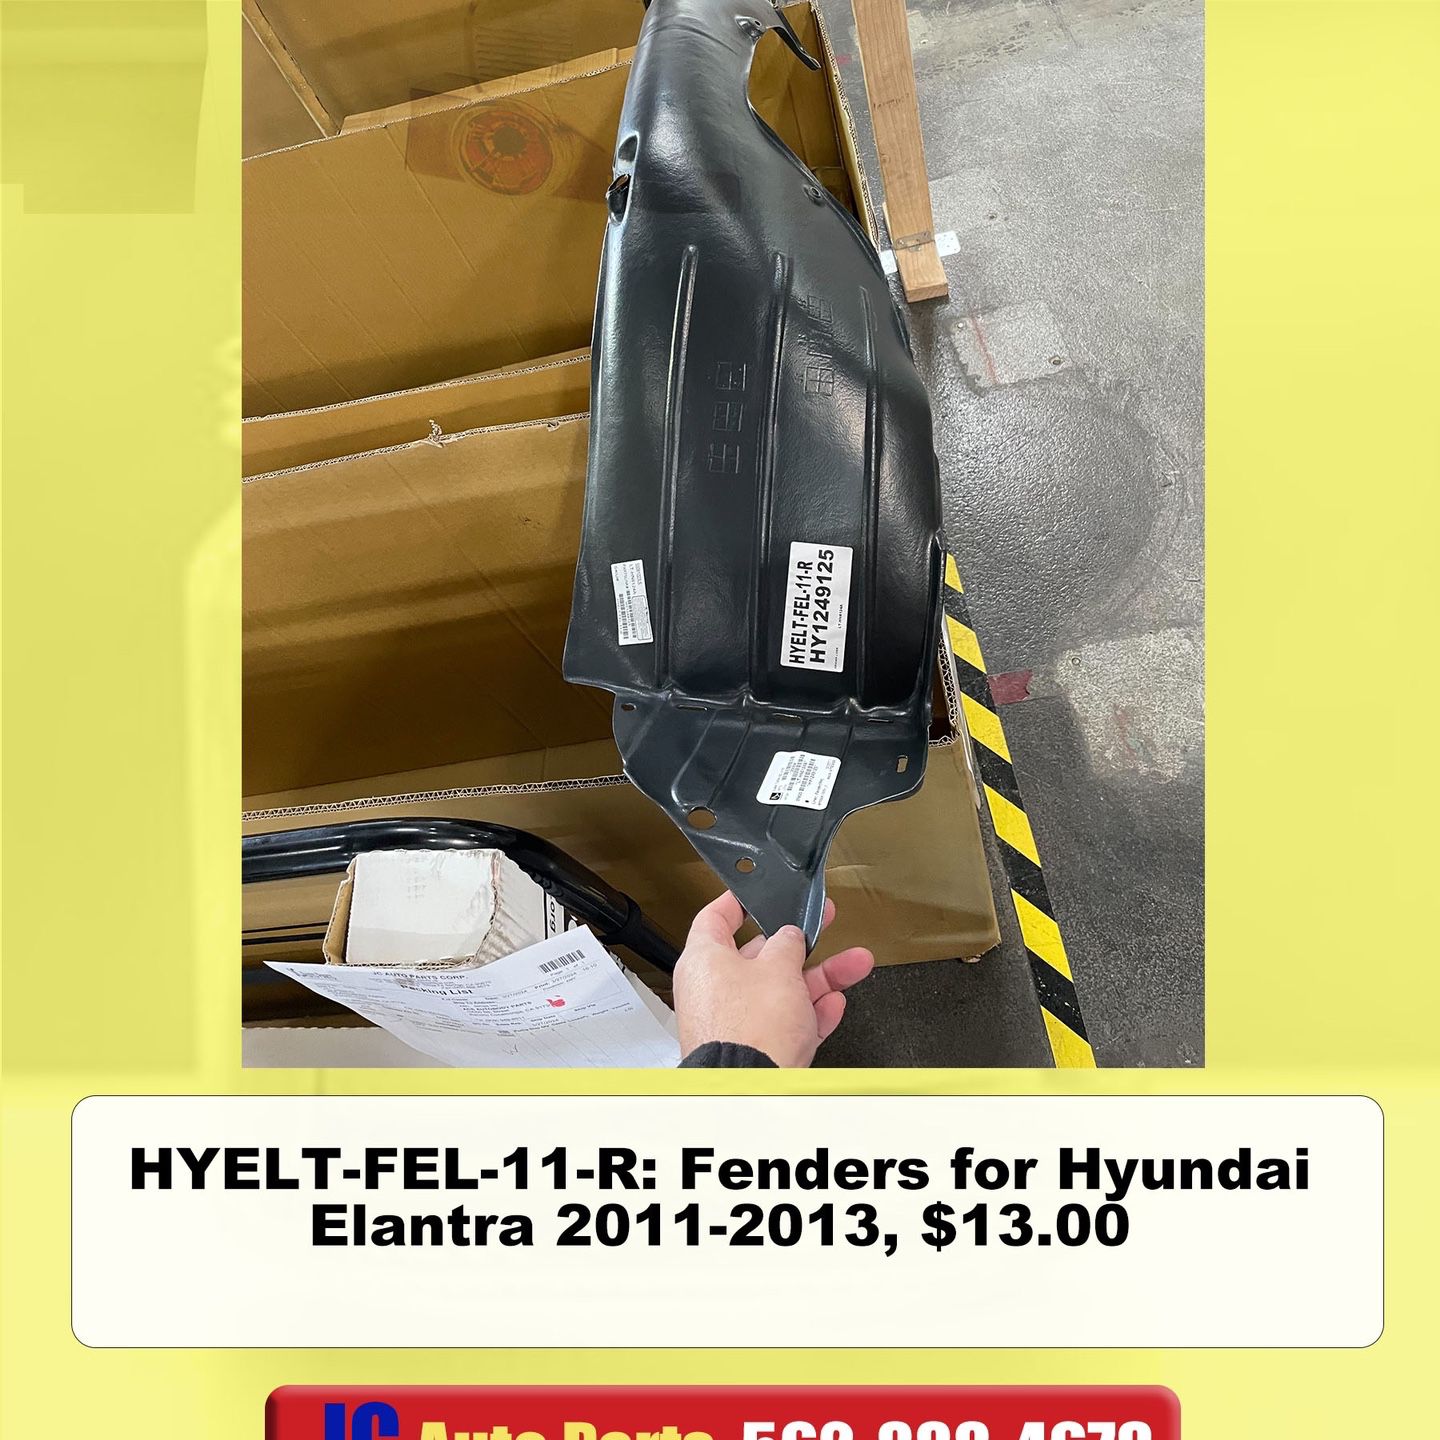 Fenders for Hyundai Elantra 2011 2012 2013